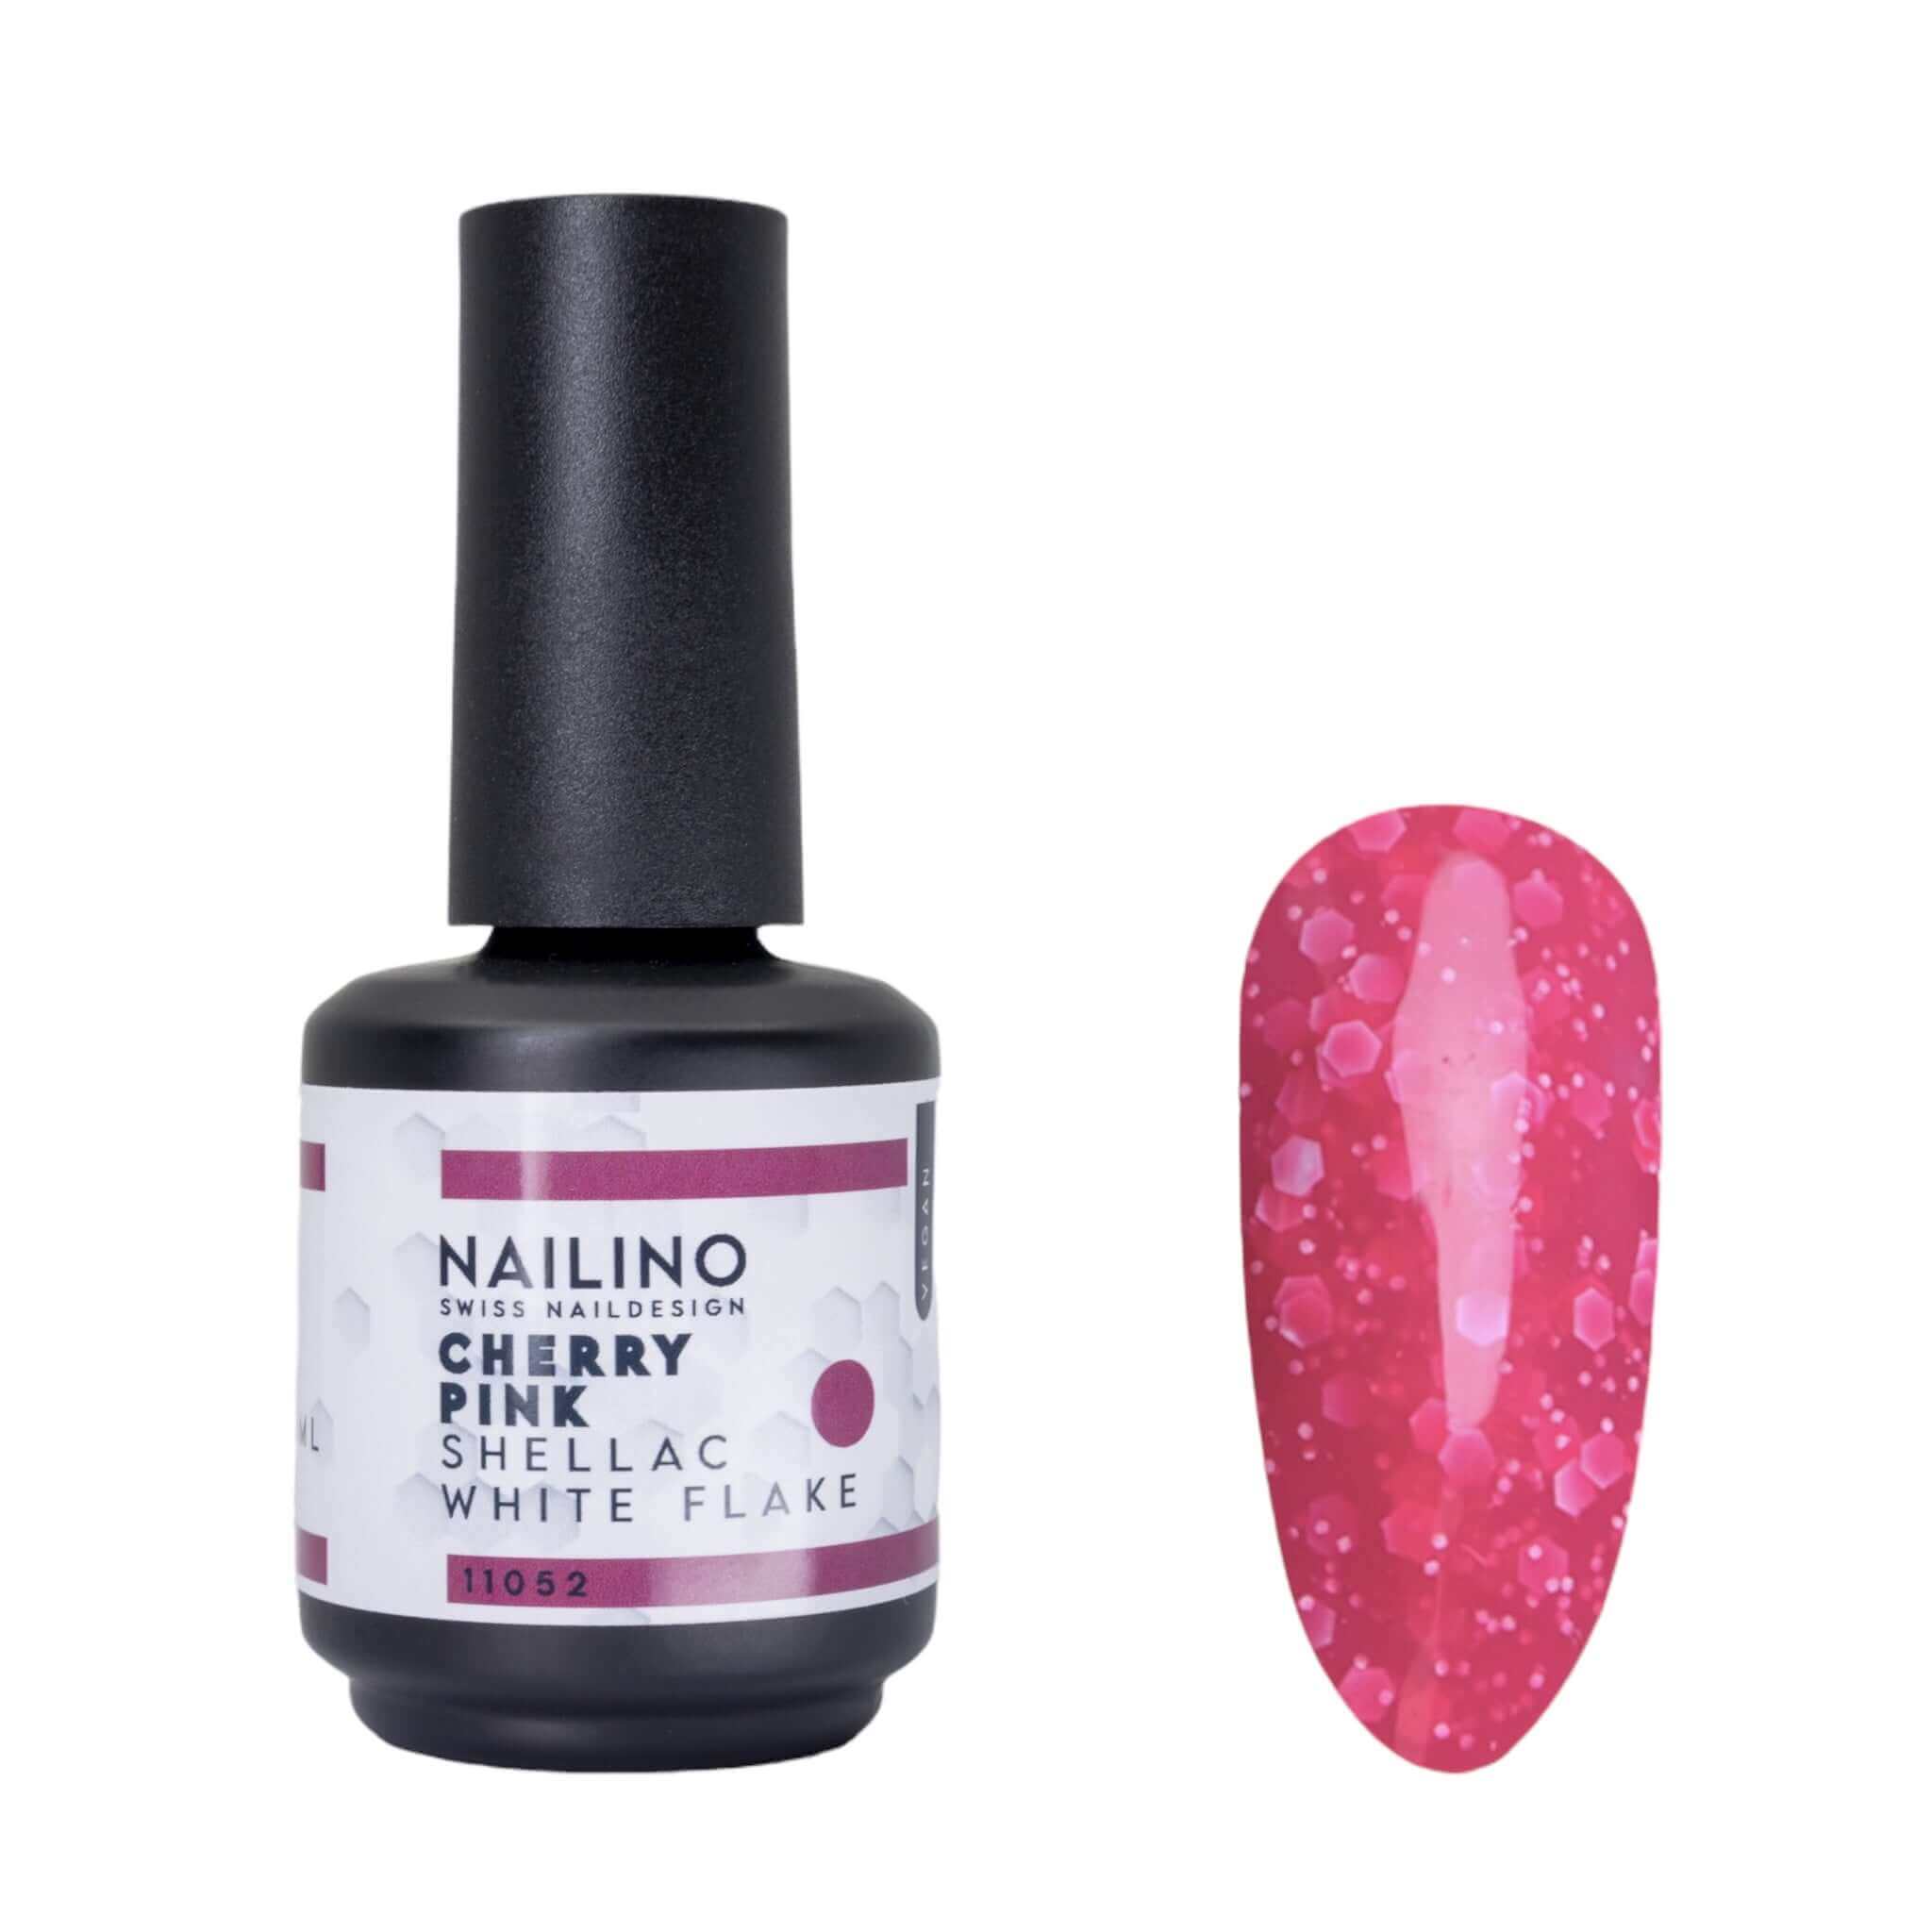 NAILINO Shellac White Flake Cherry Pink -